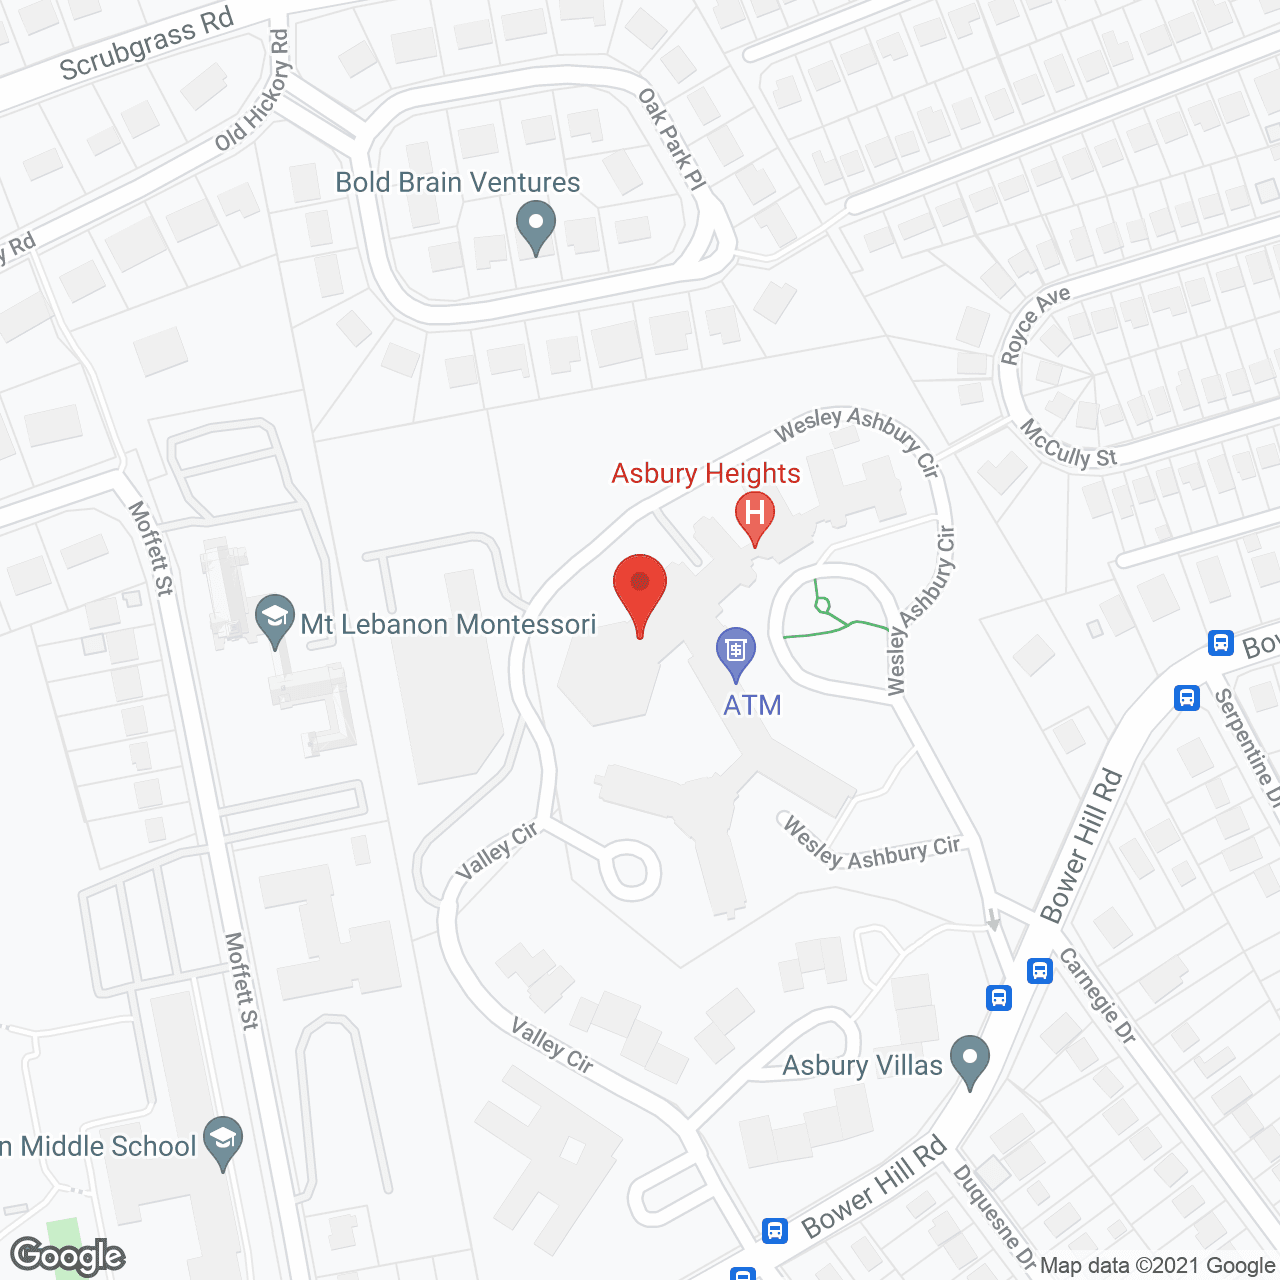 Asbury Heights in google map